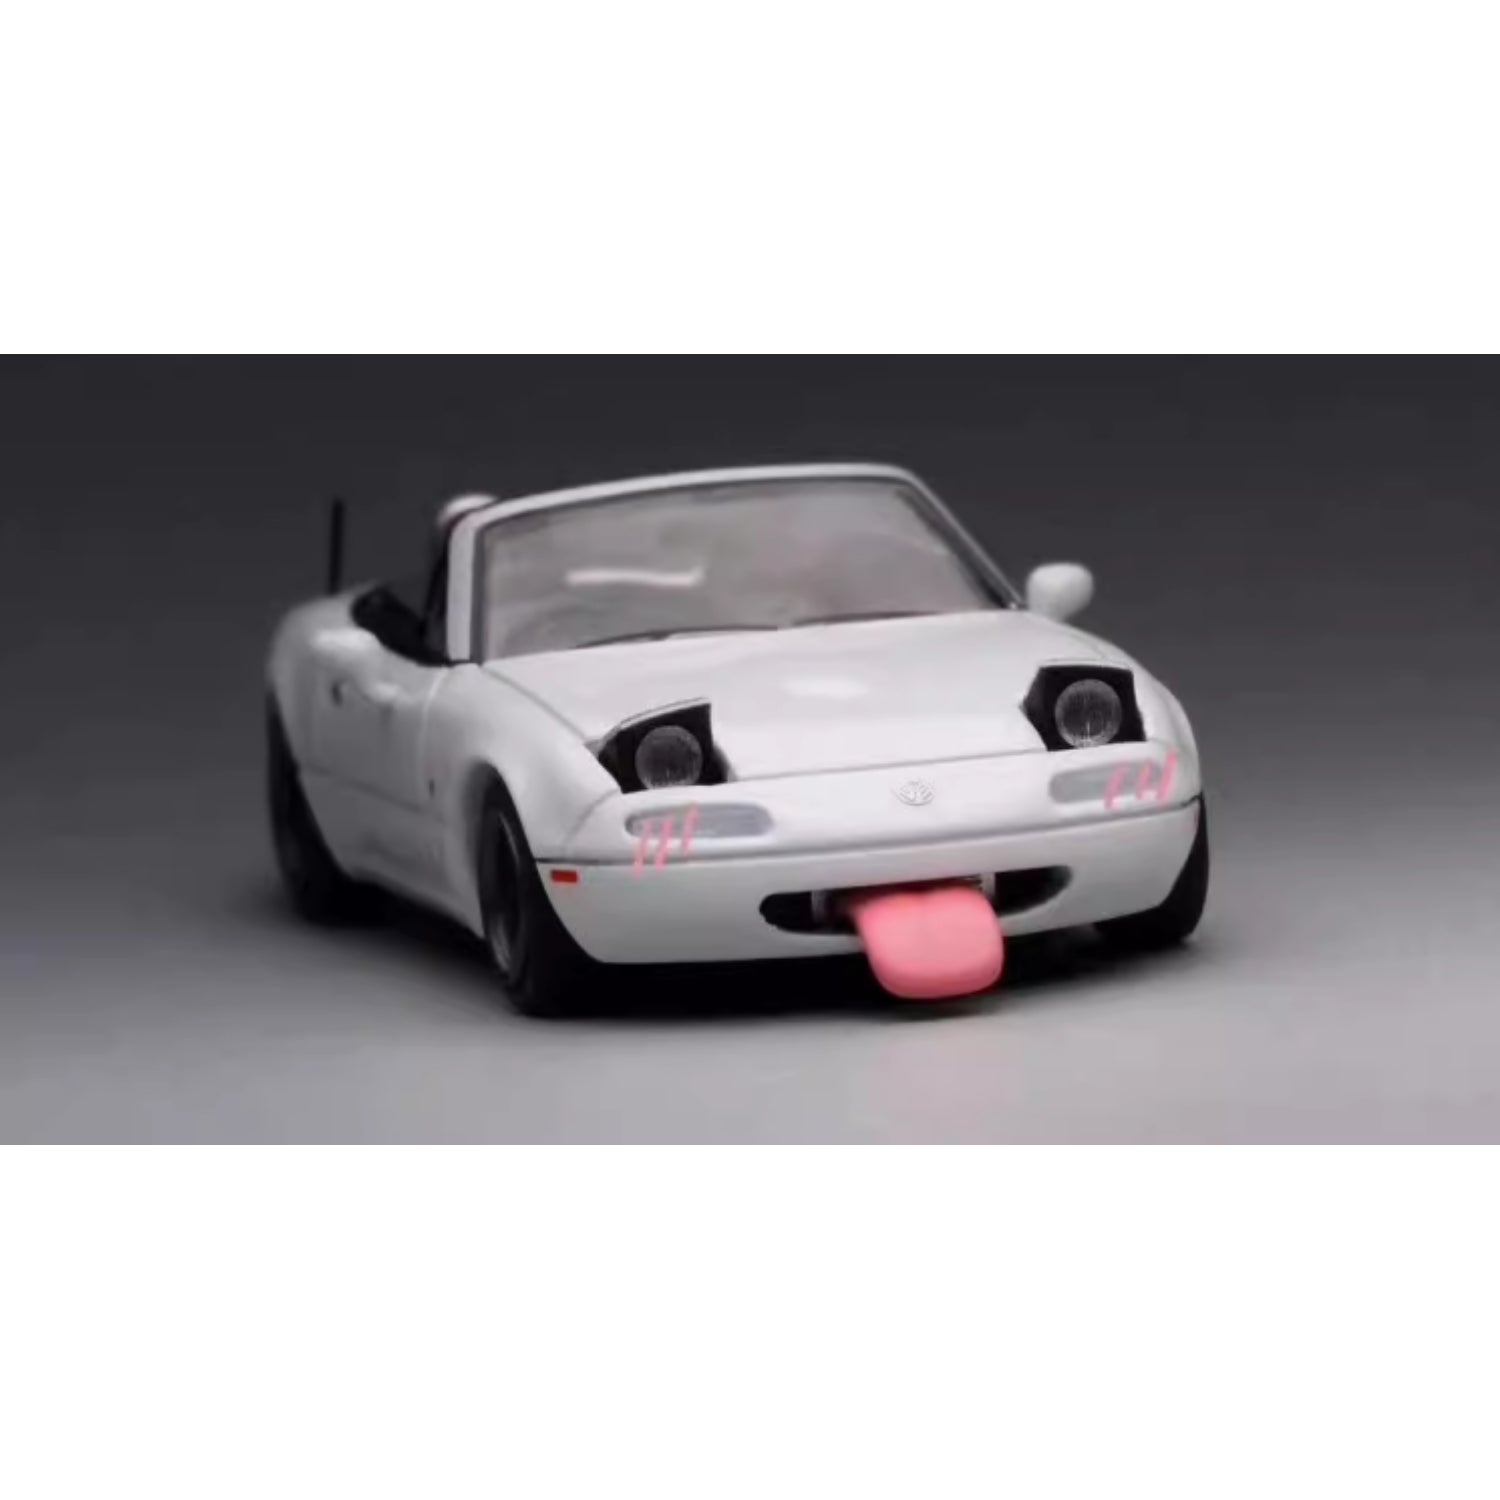 1/64 Pink Tongue for Mazda Mx5